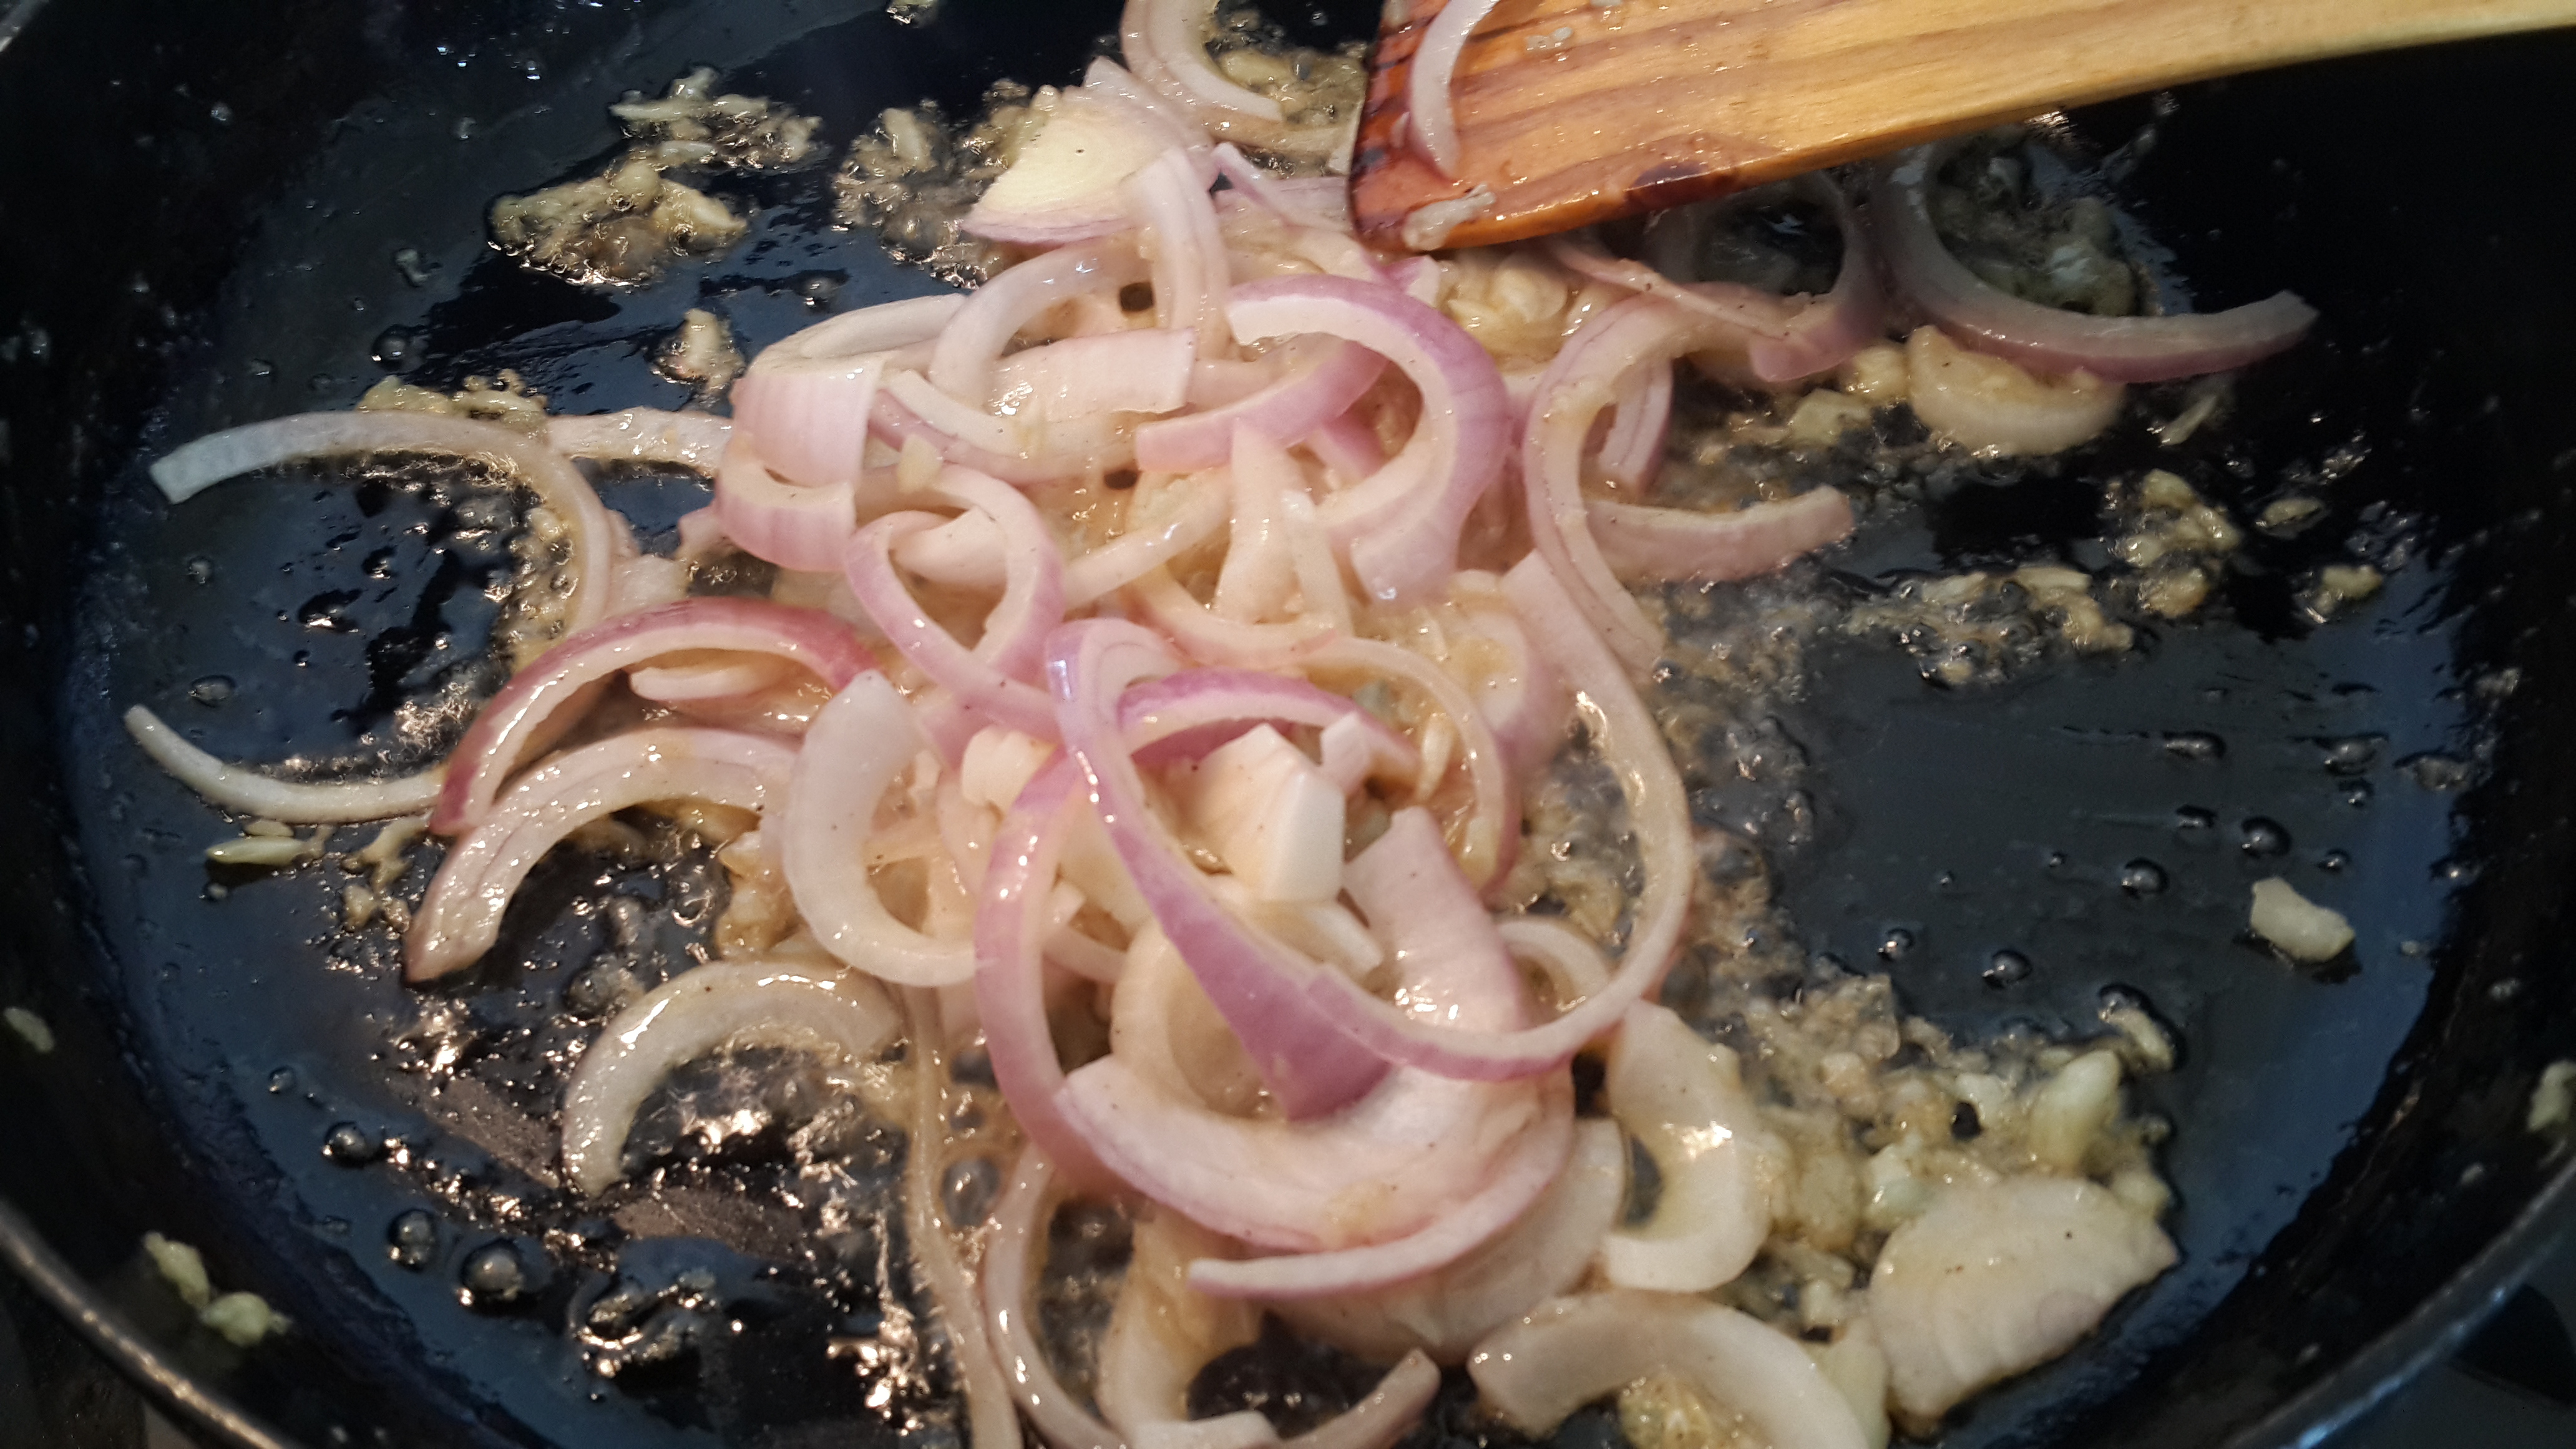 Onions and garlic mixture